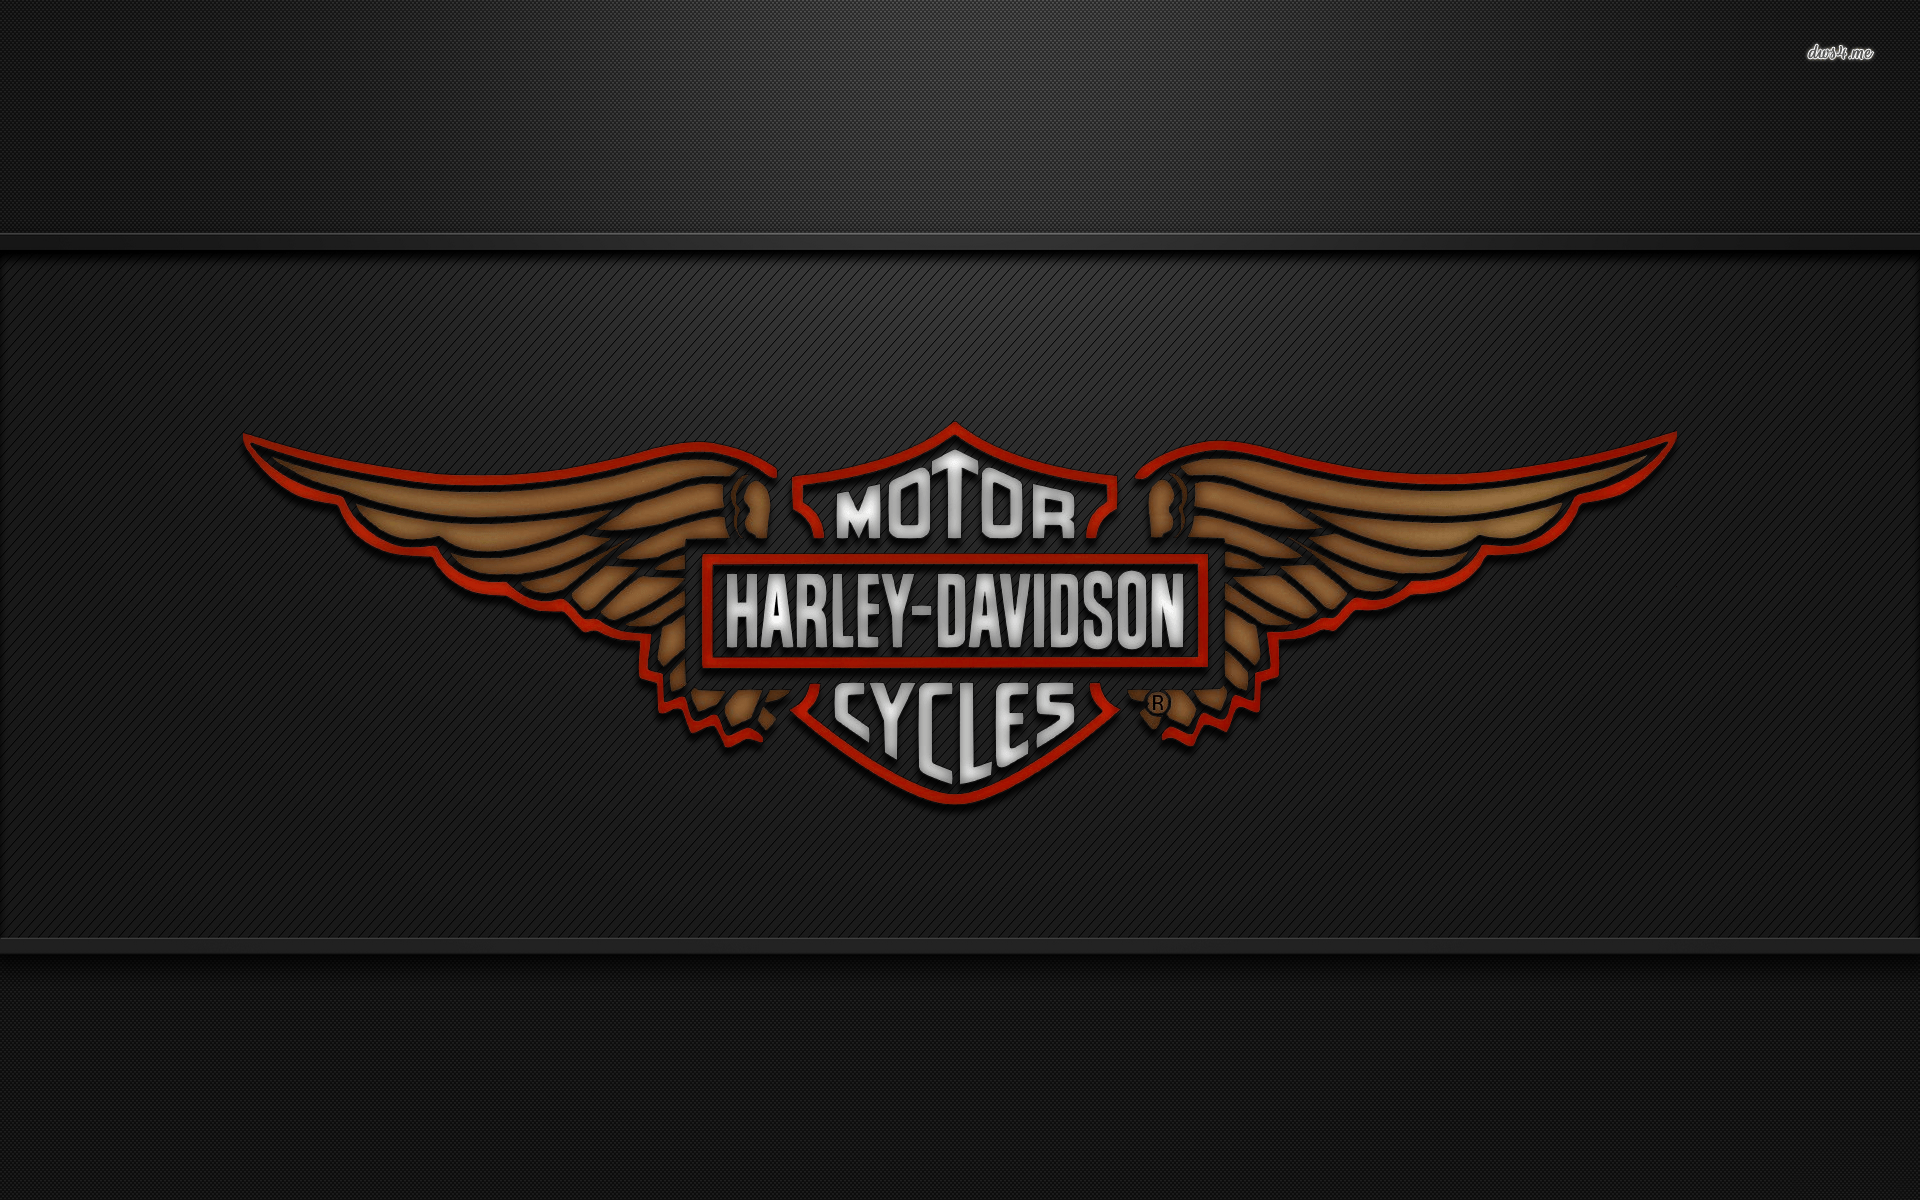 Harley Davidson wings logo wallpaper wallpaper